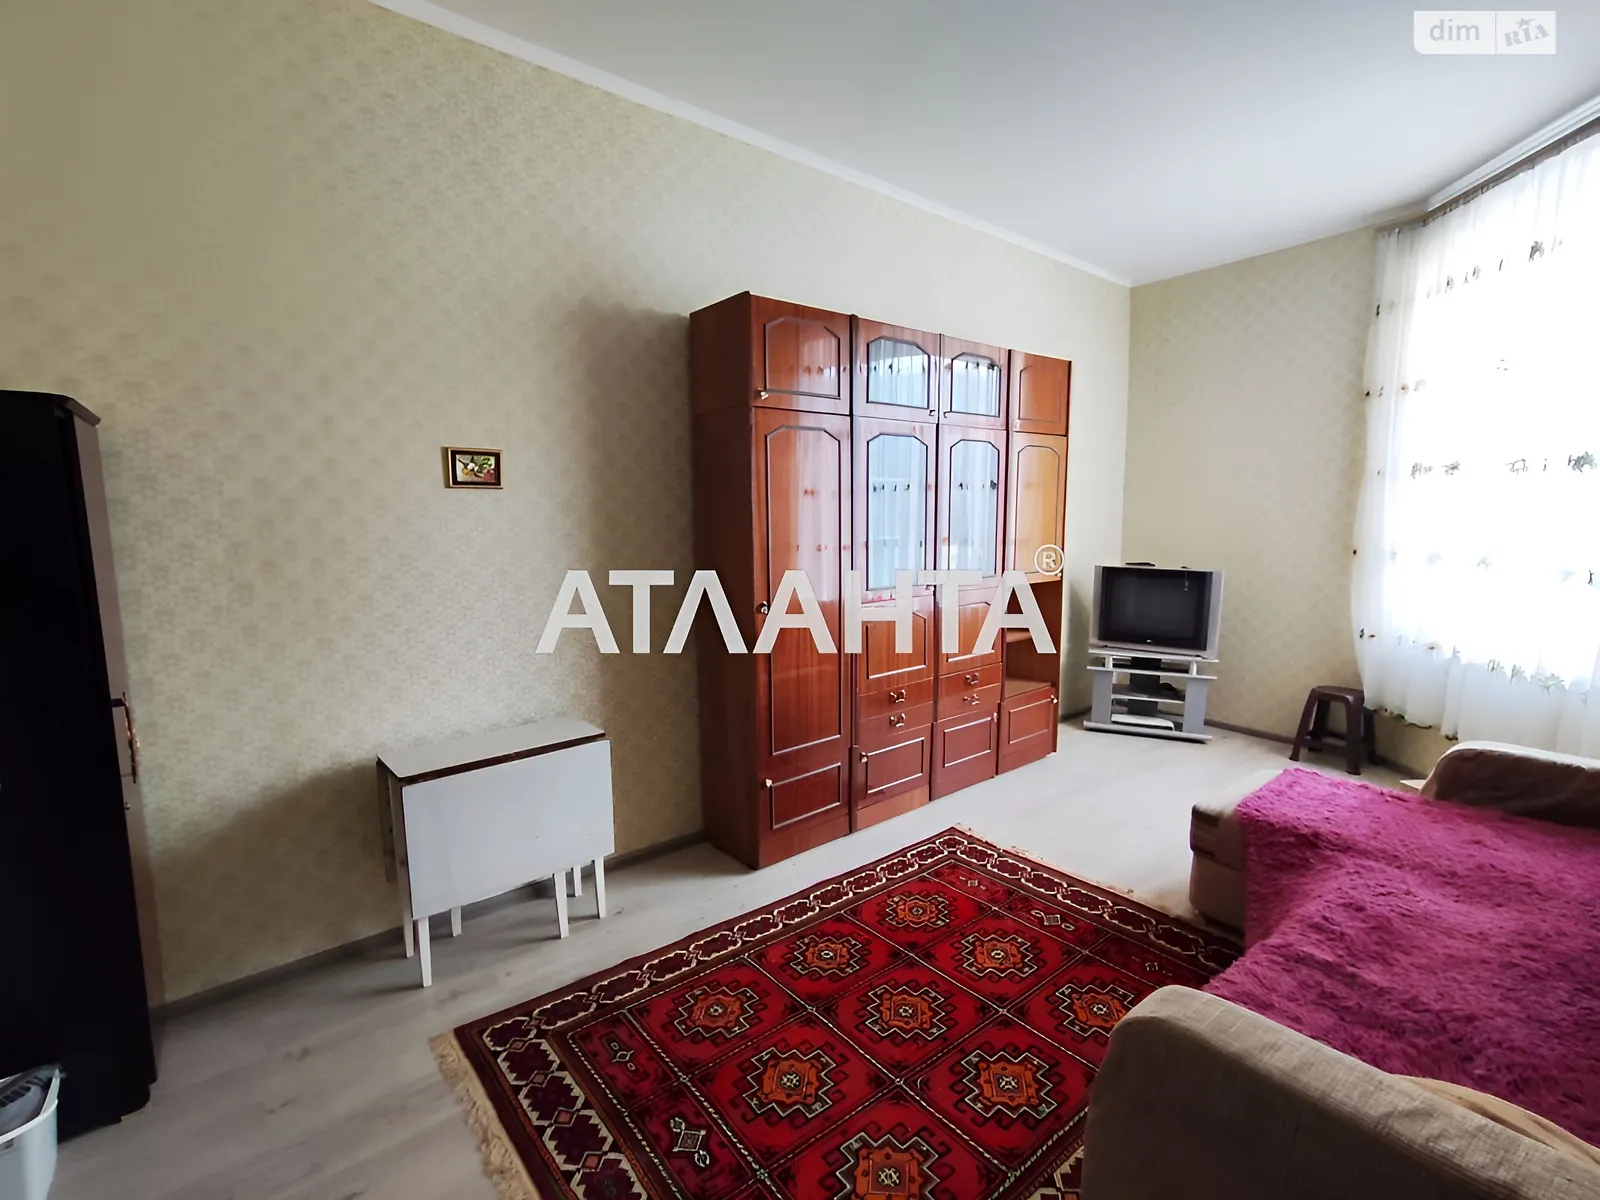 Продается комната 20 кв. м в Одессе, цена: 17000 $ - фото 1